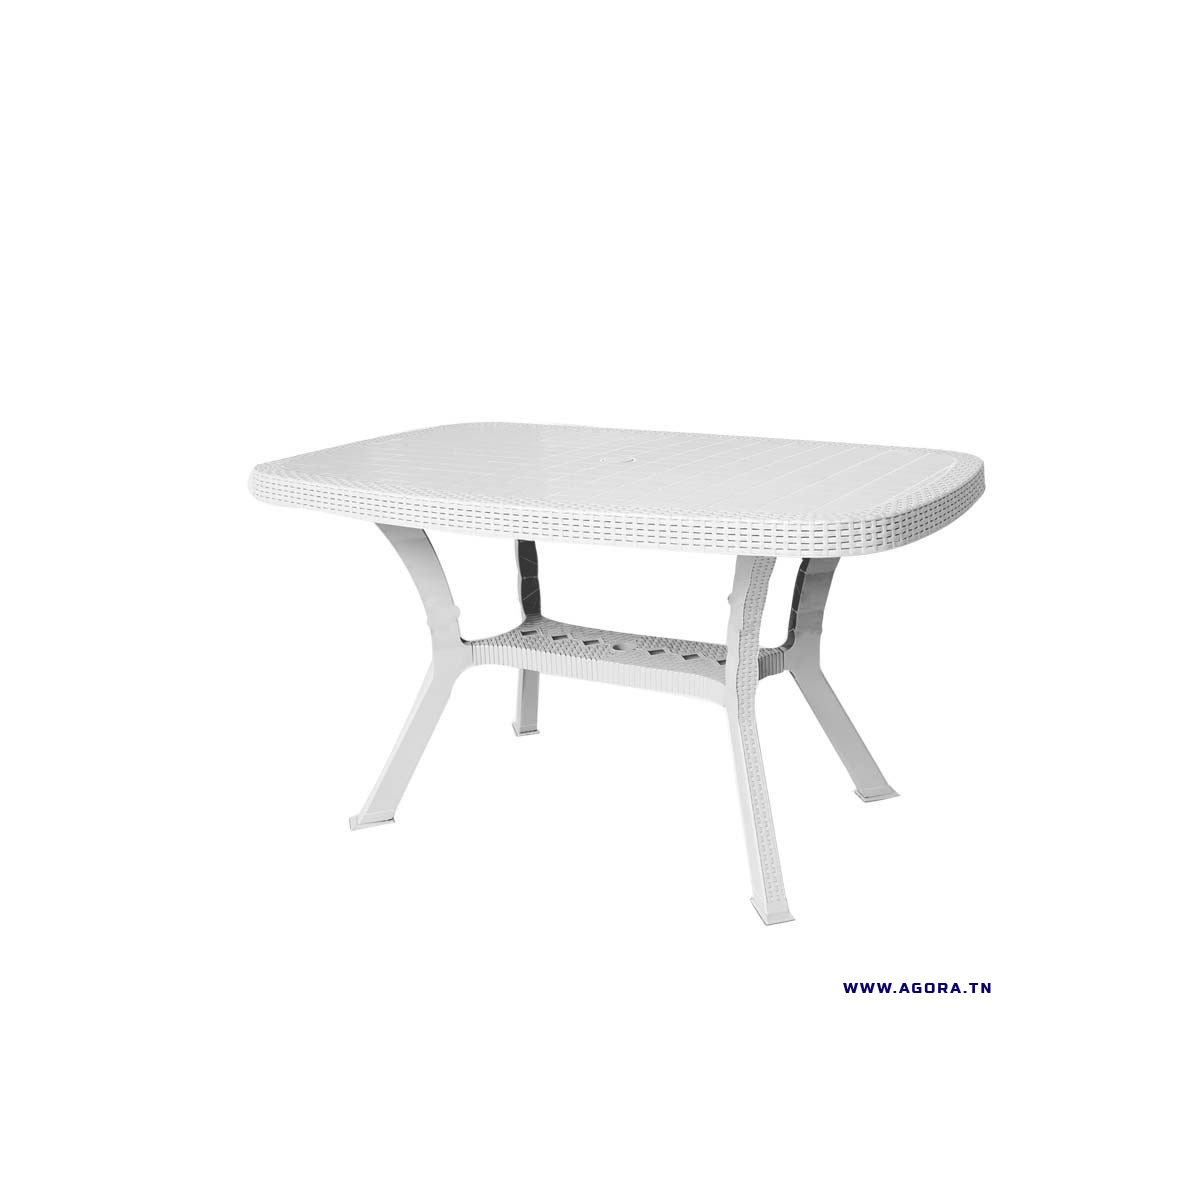 TABLE DE JARDIN SOTUFAB RECTANGULAIRE HARMONY 81.7*136.7CM BLANC | Agora.tn